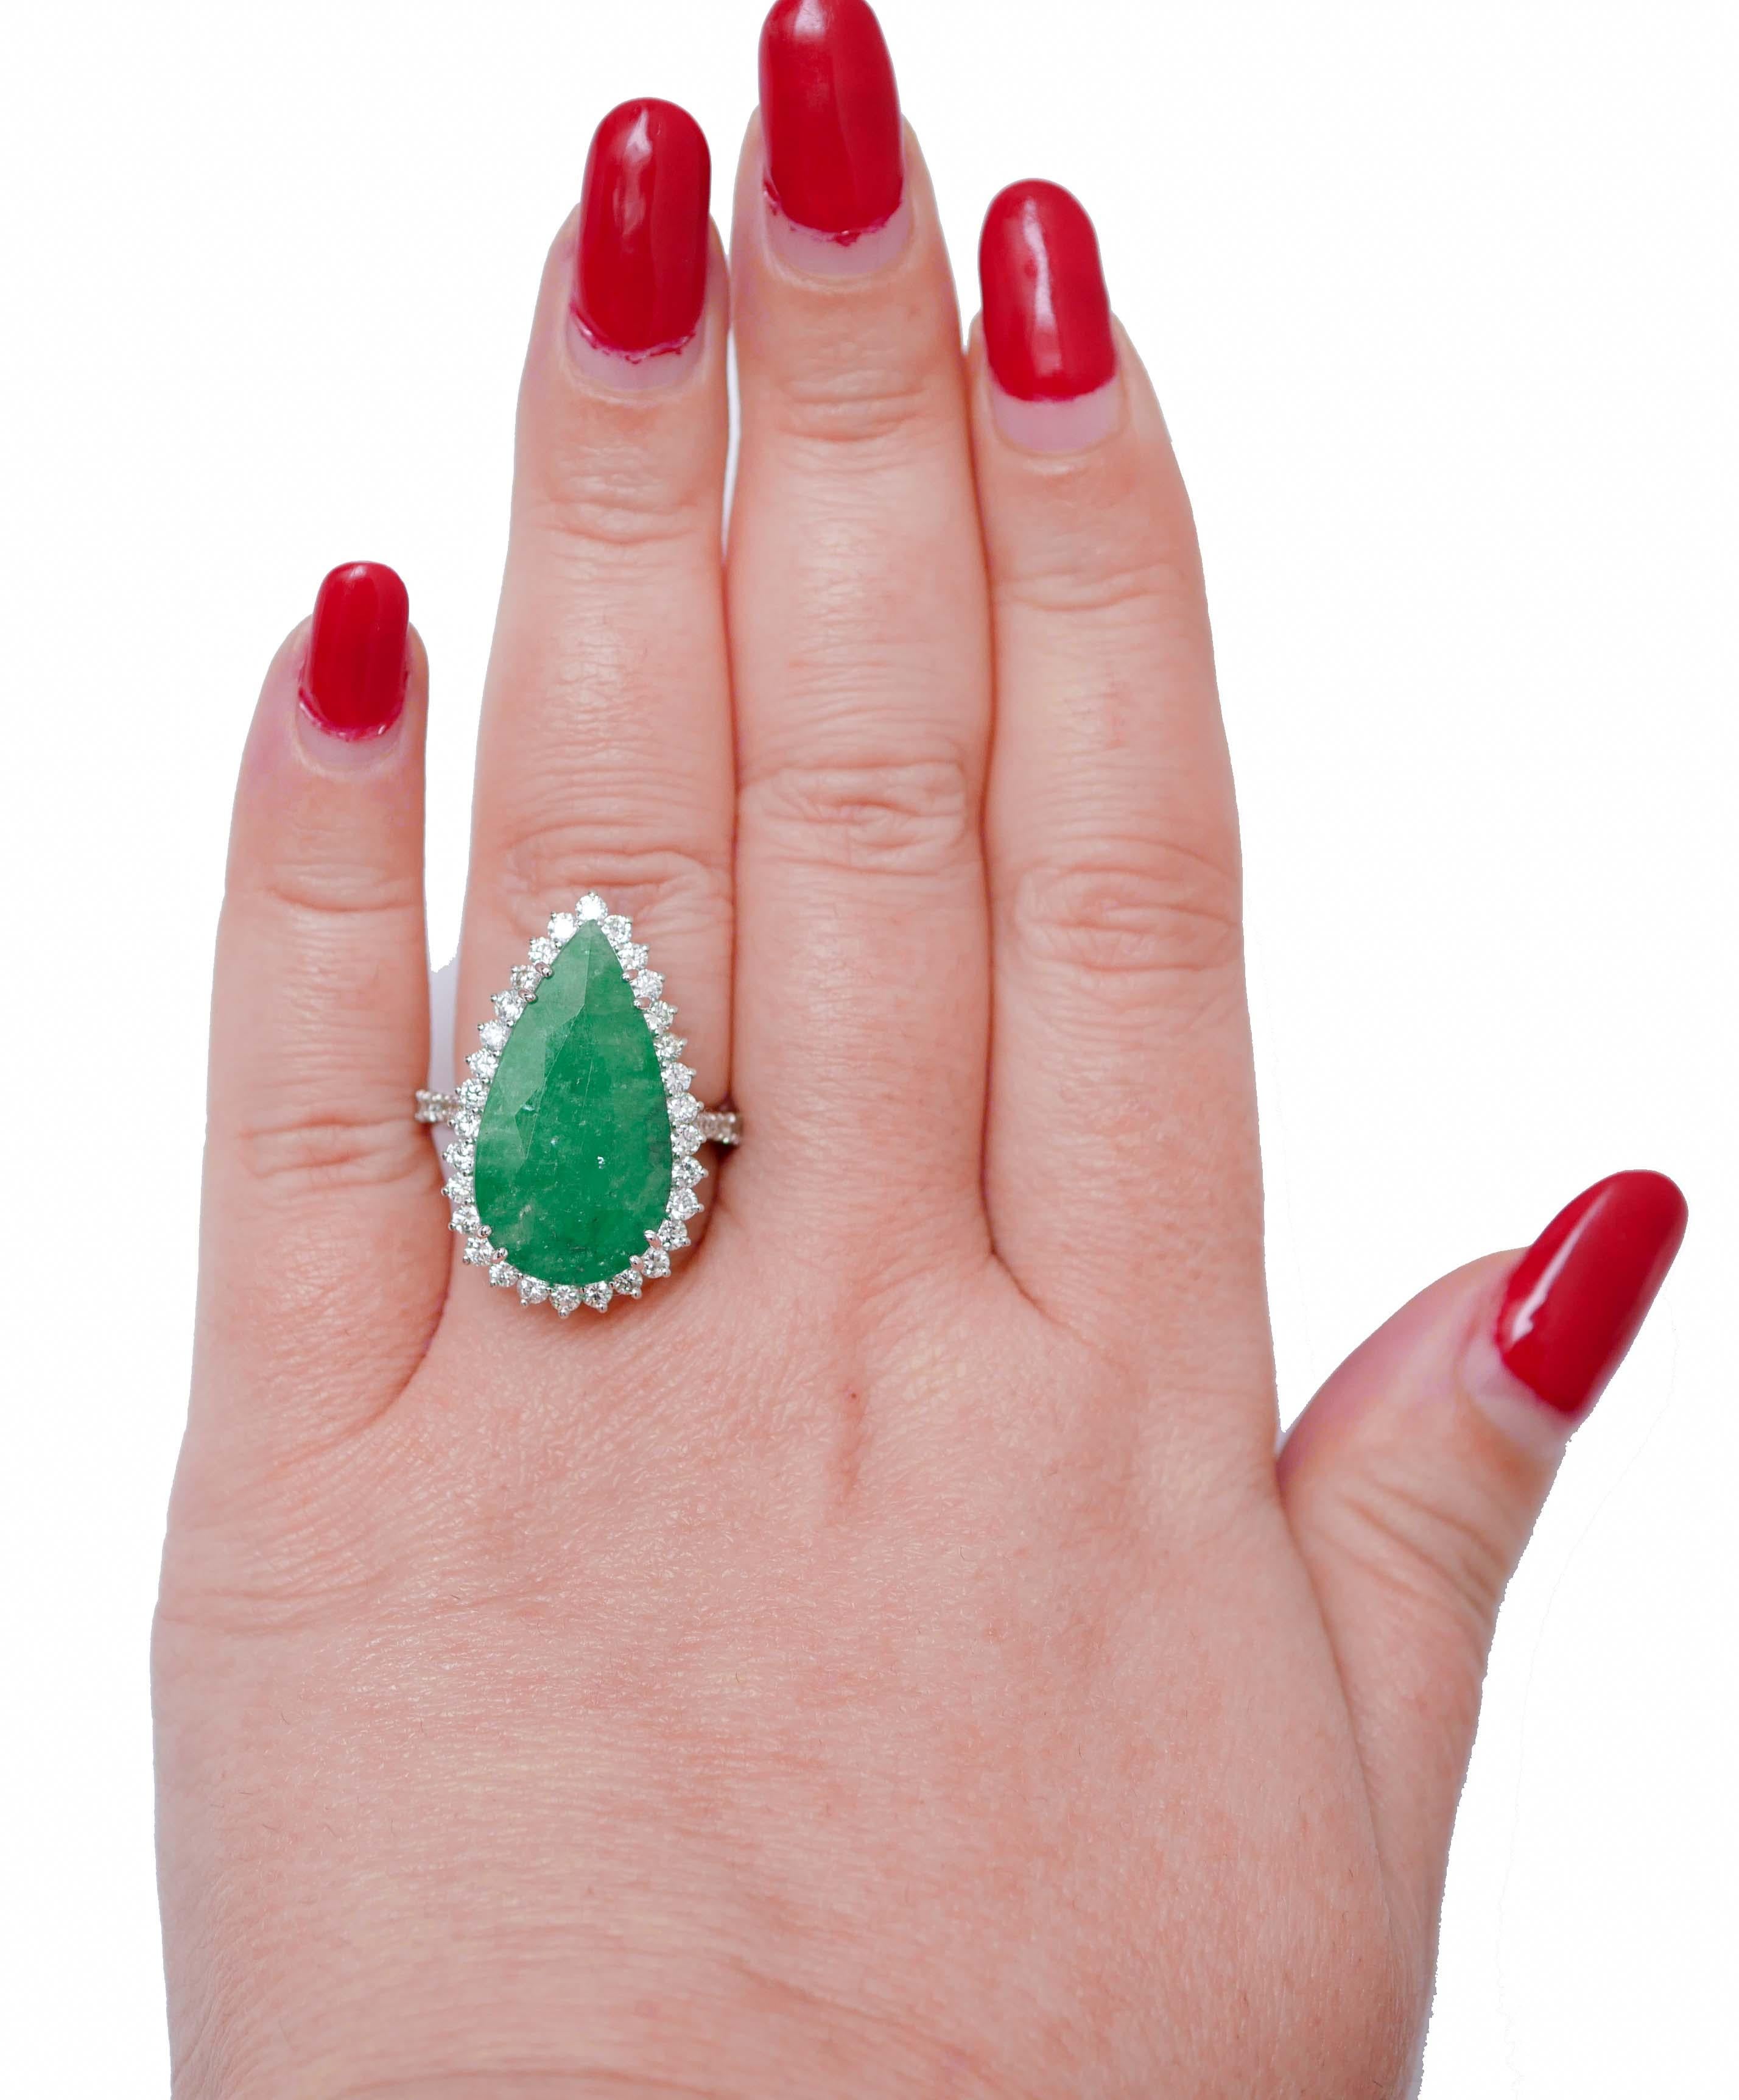 Mixed Cut Emerald, Diamonds, 18 Karat White Gold Ring. For Sale